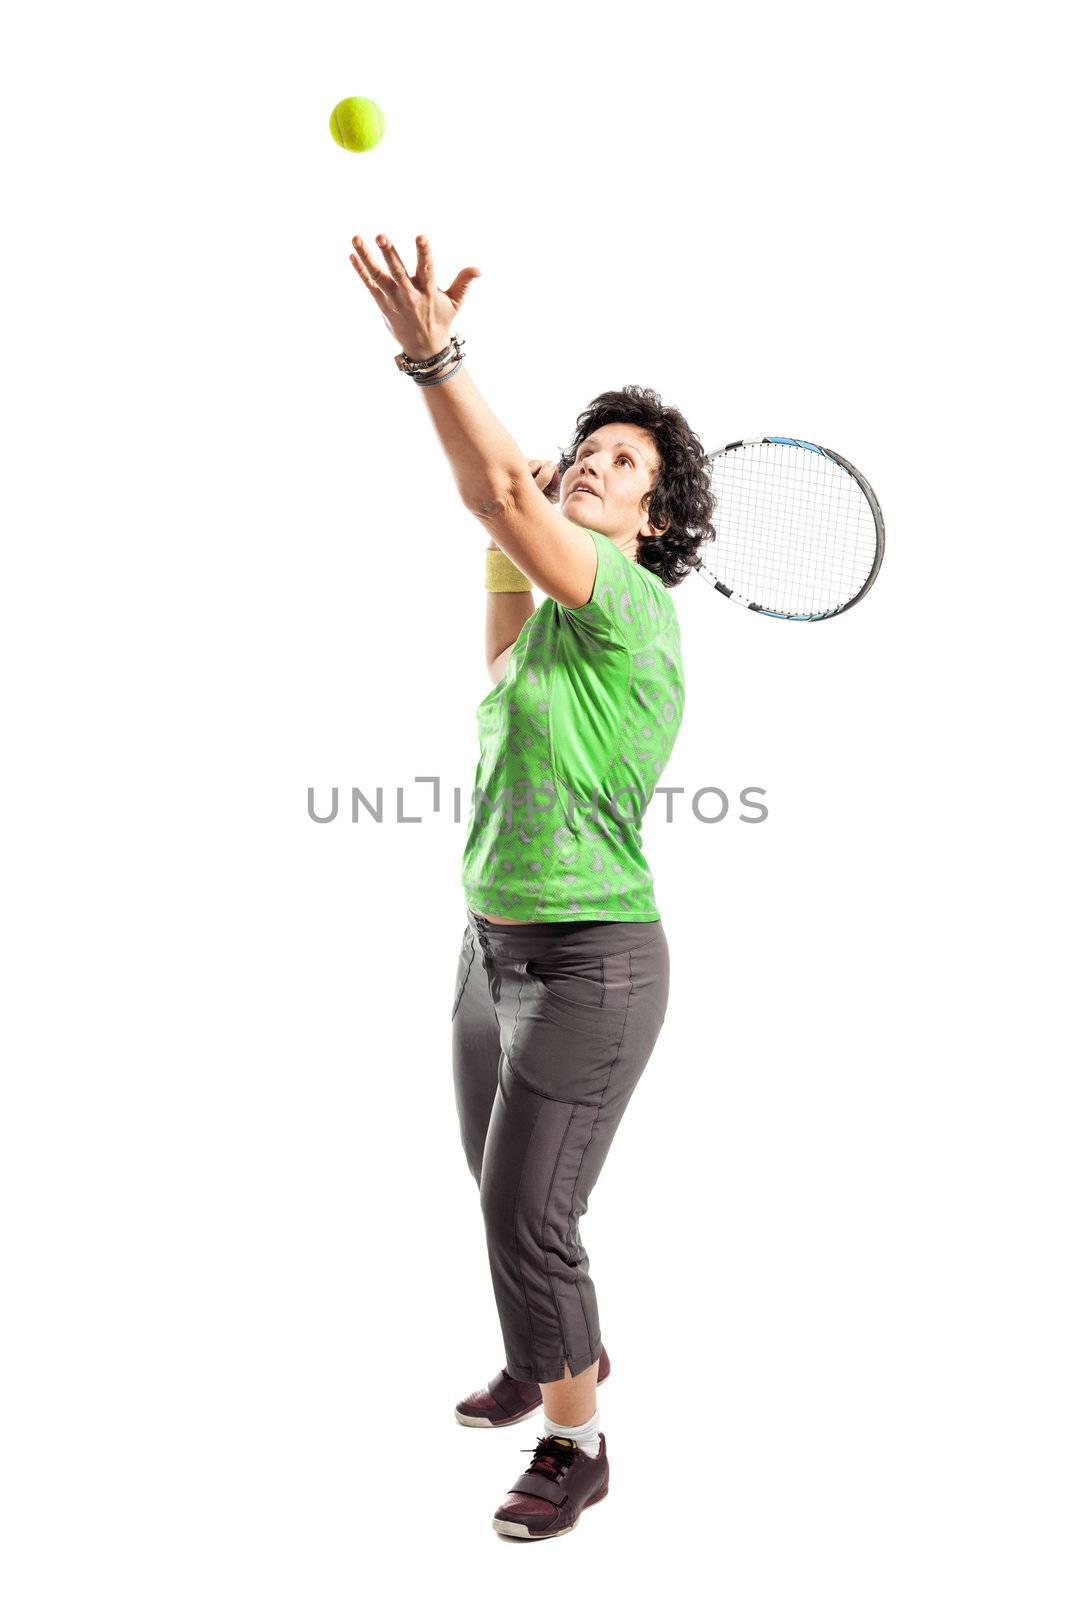 Tennis player by kokimk